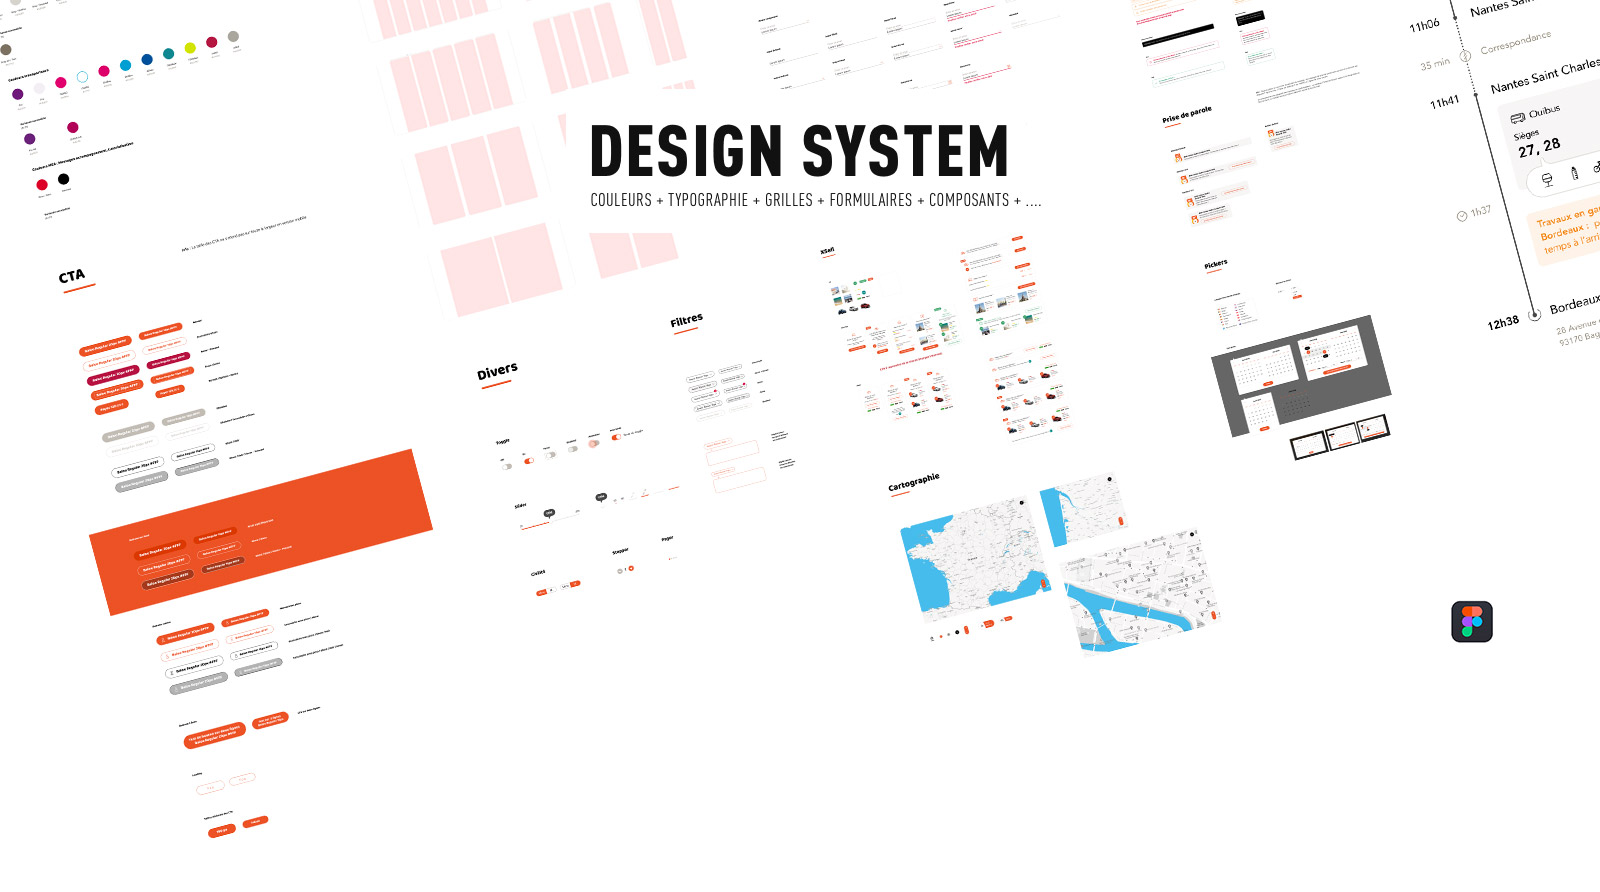 oui_designsystem2 // Fabien Stimulak, UX UI Designer, DA digital, Paris, France